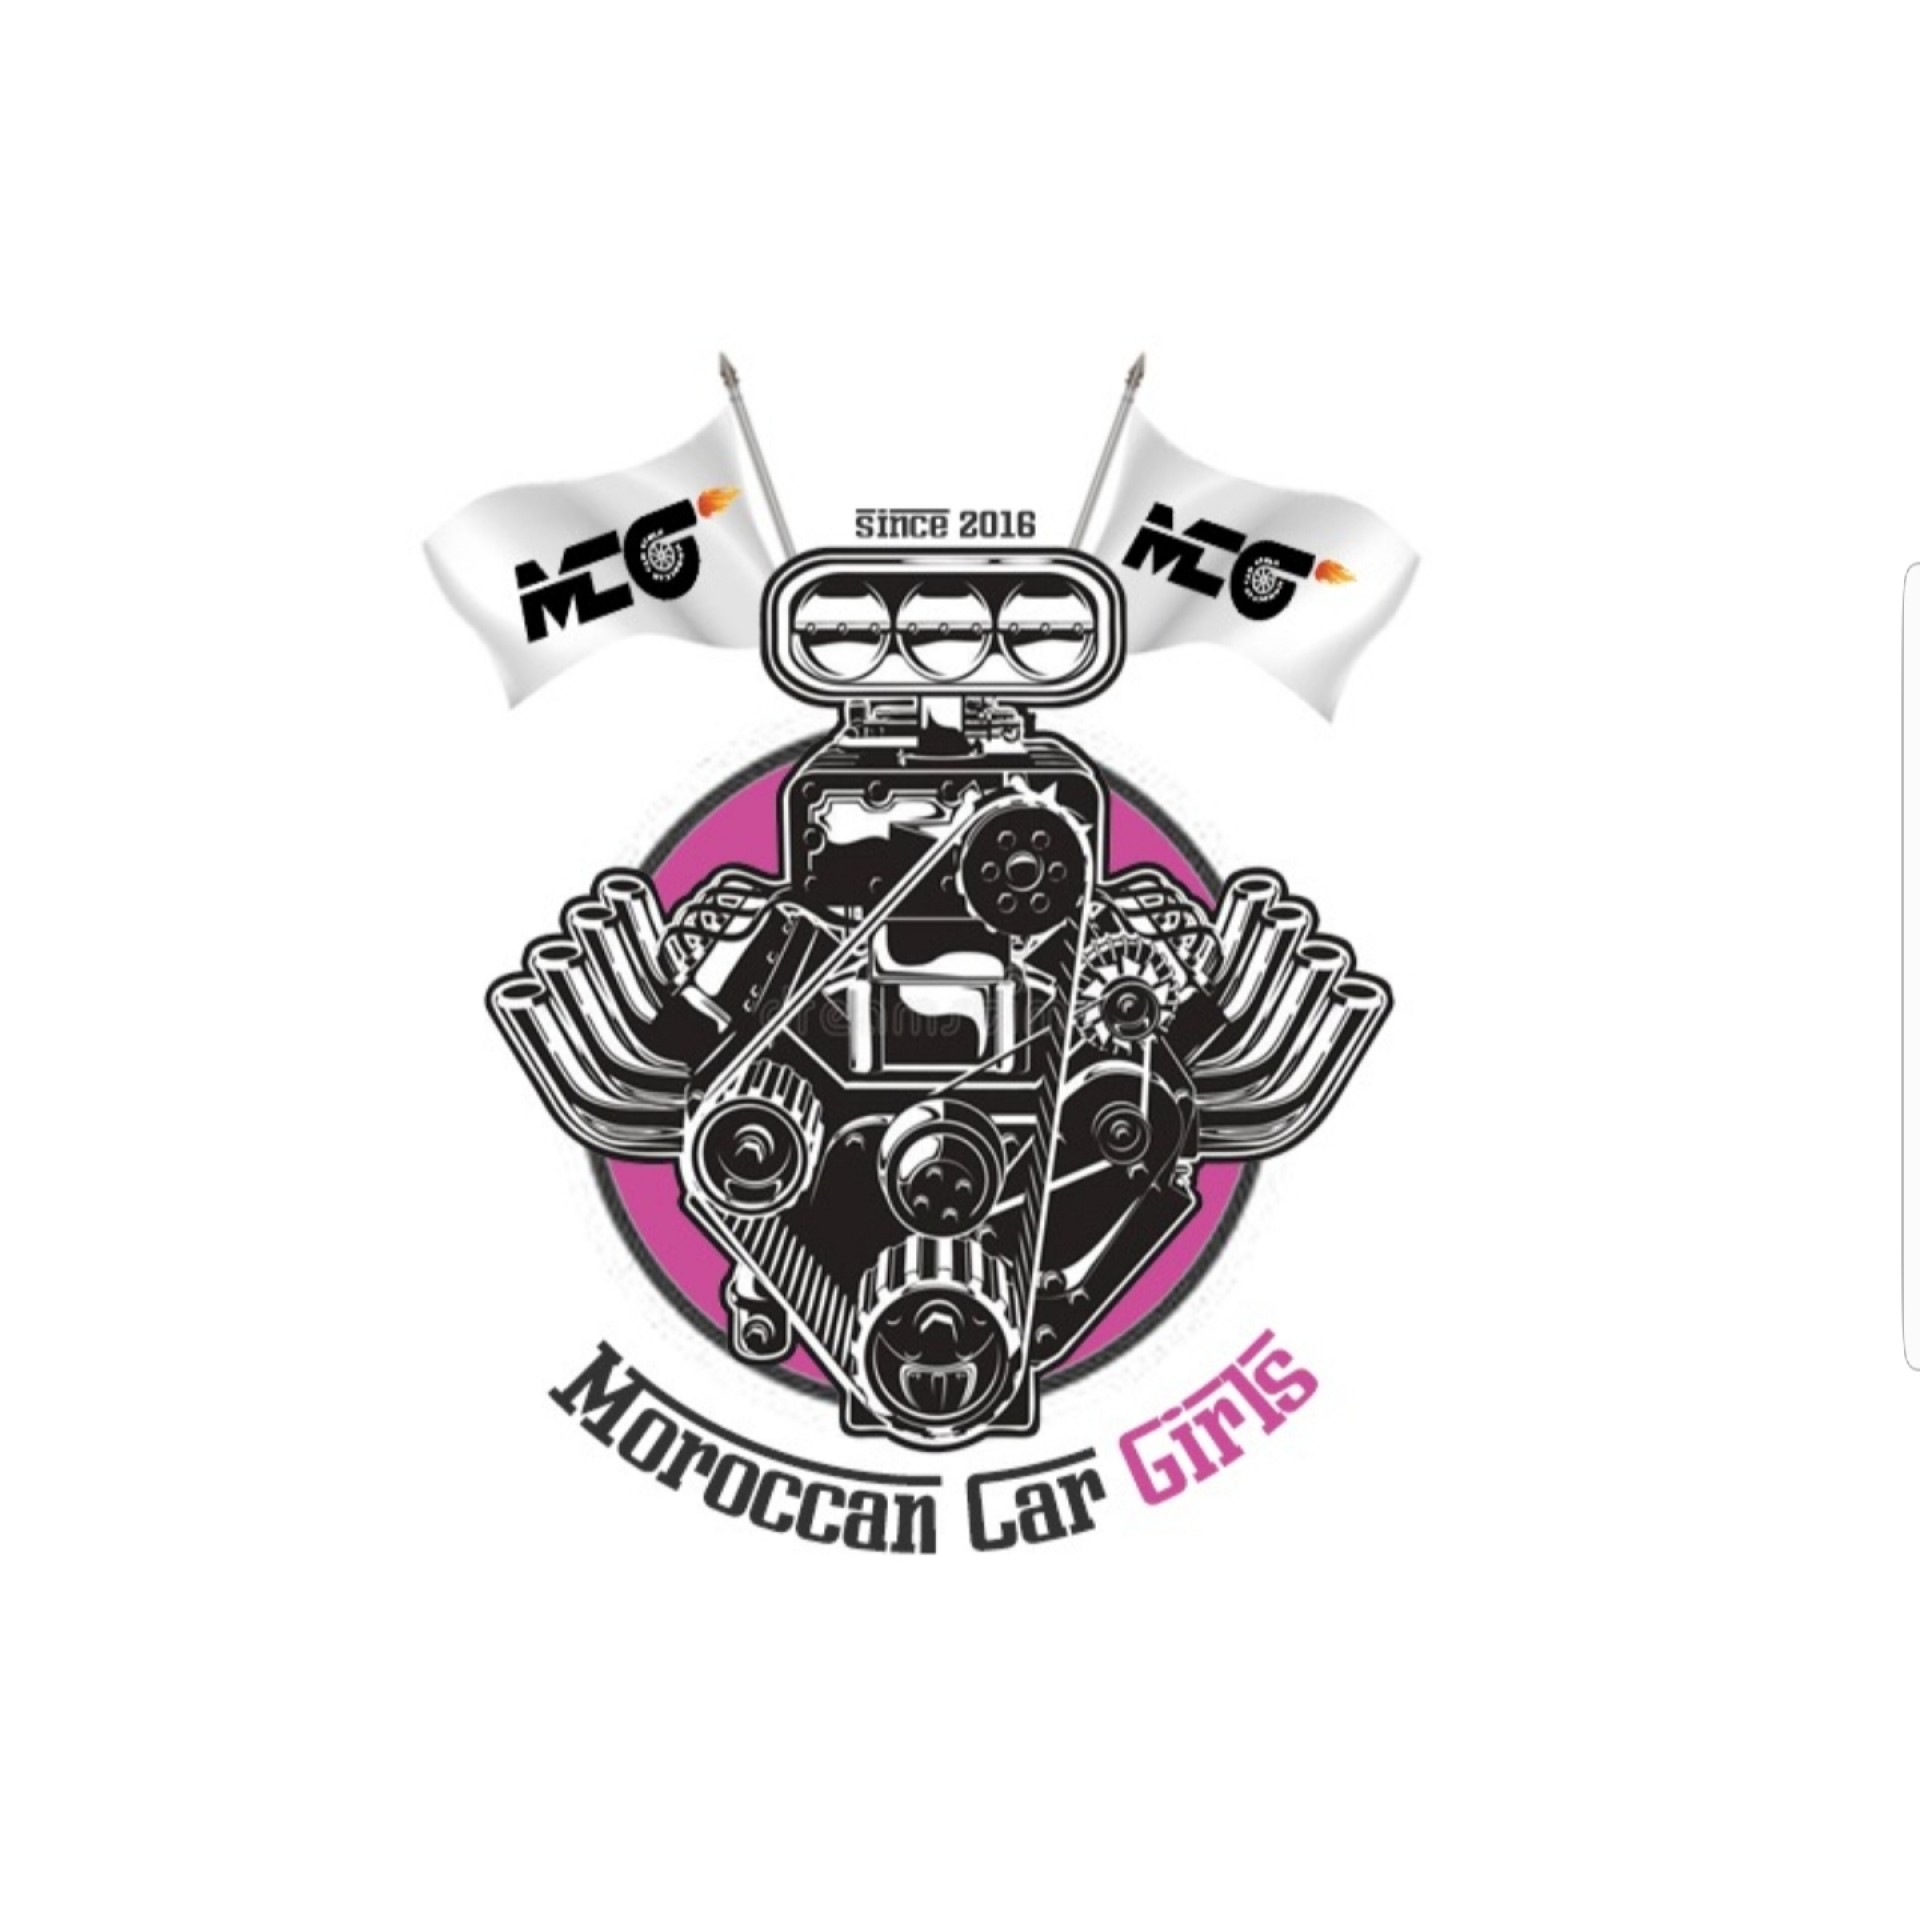 Moroccan Car Girls logo